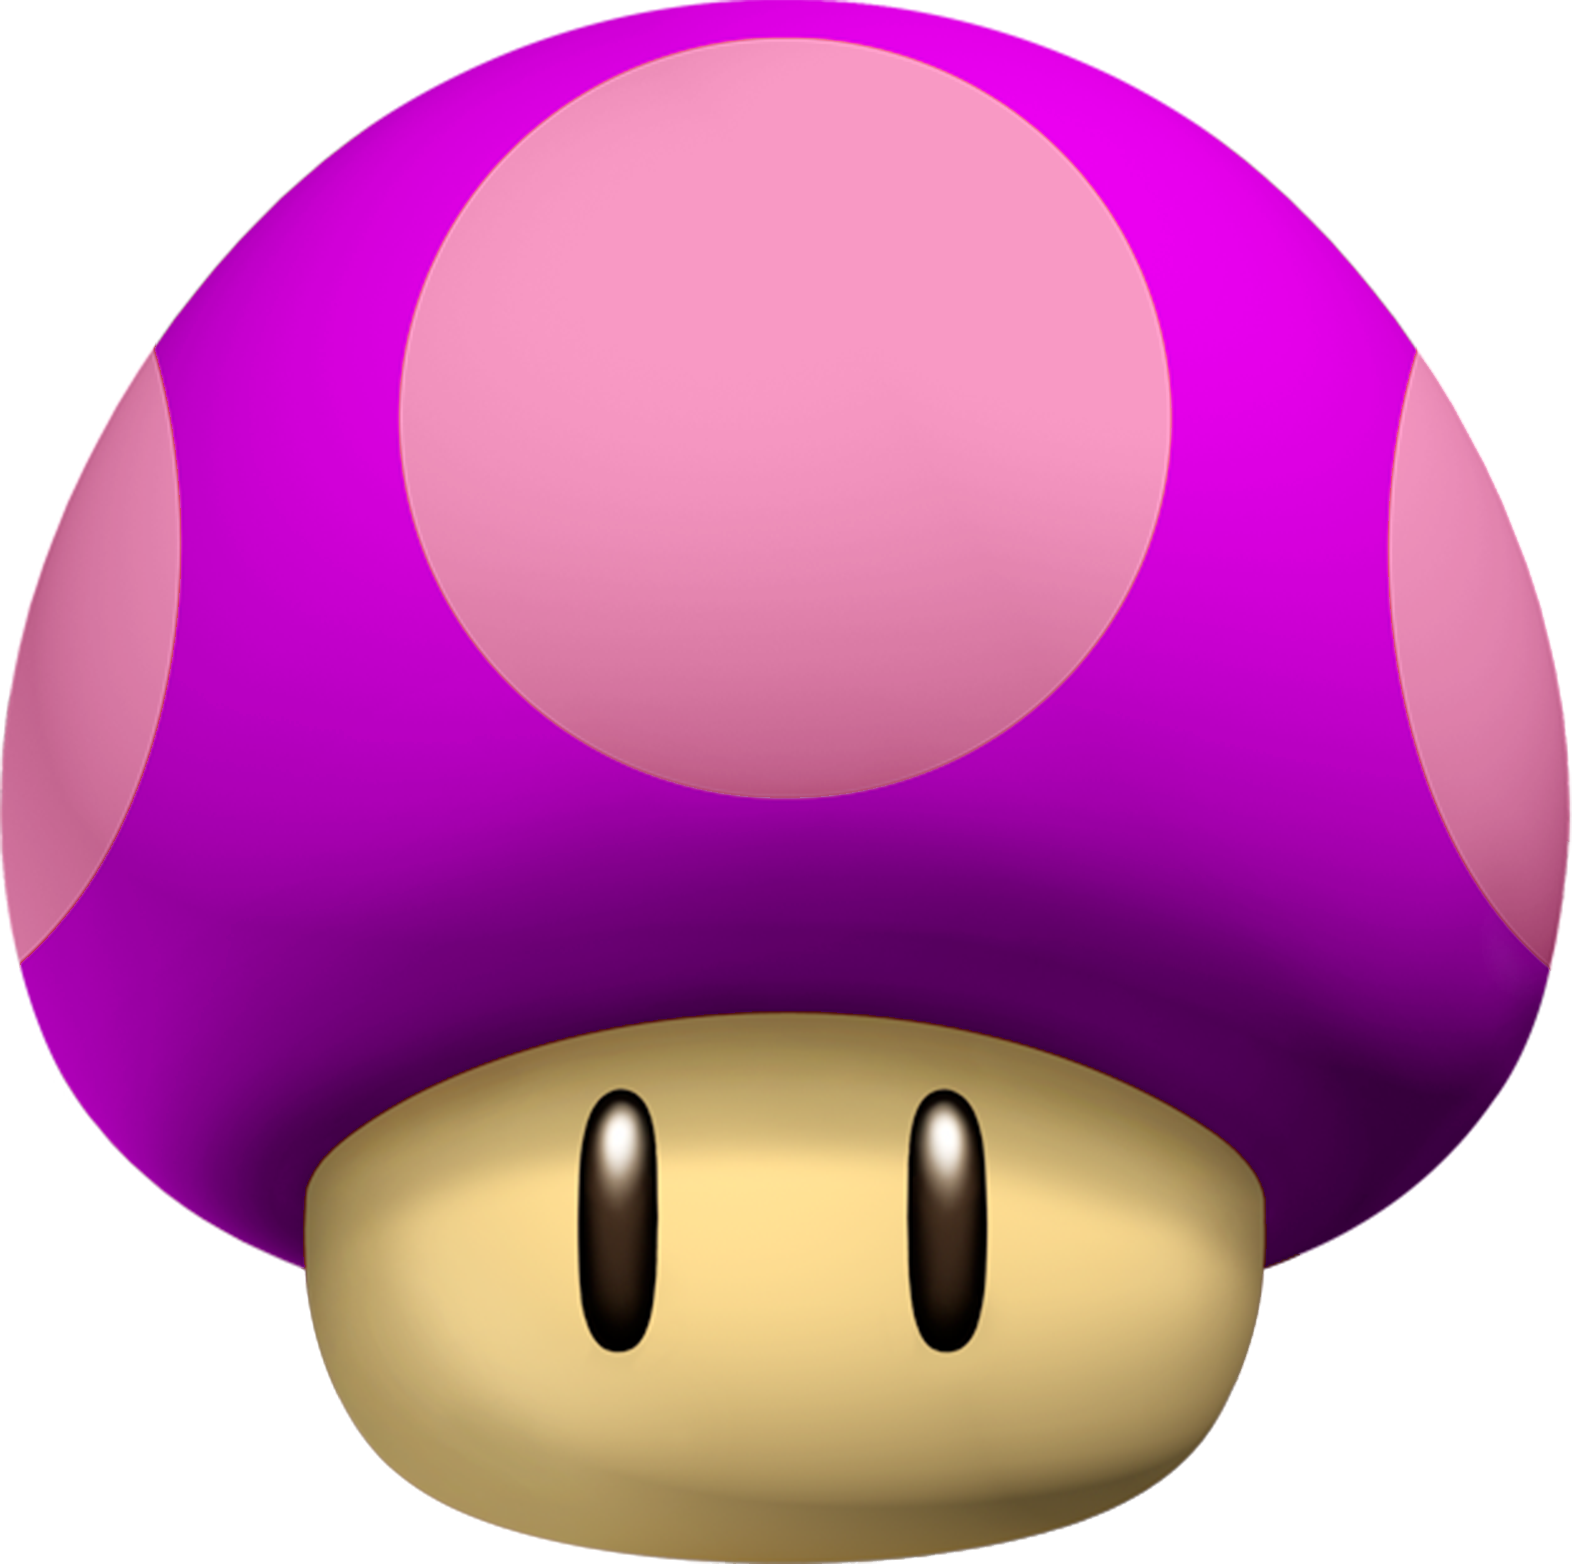 Image Poison Mushroom Mario Kart Wiipng Mario Kart Racing Wiki Fandom Powered By Wikia 2264